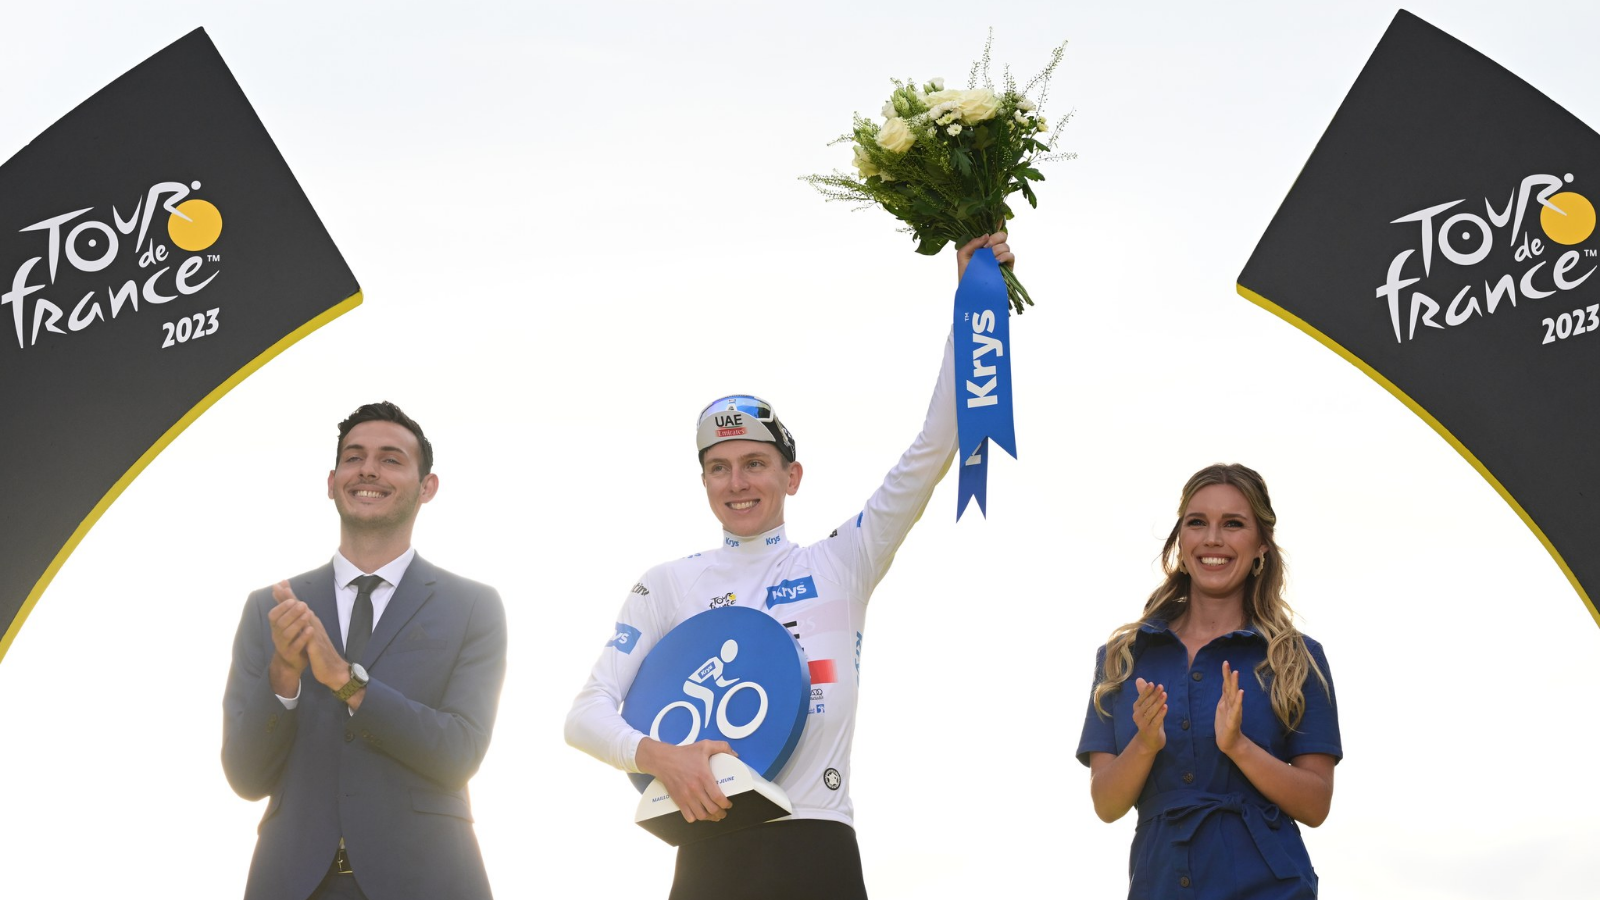 Tadej Pogacar celebrating his white jersey in Paris at the Tour de France 2023